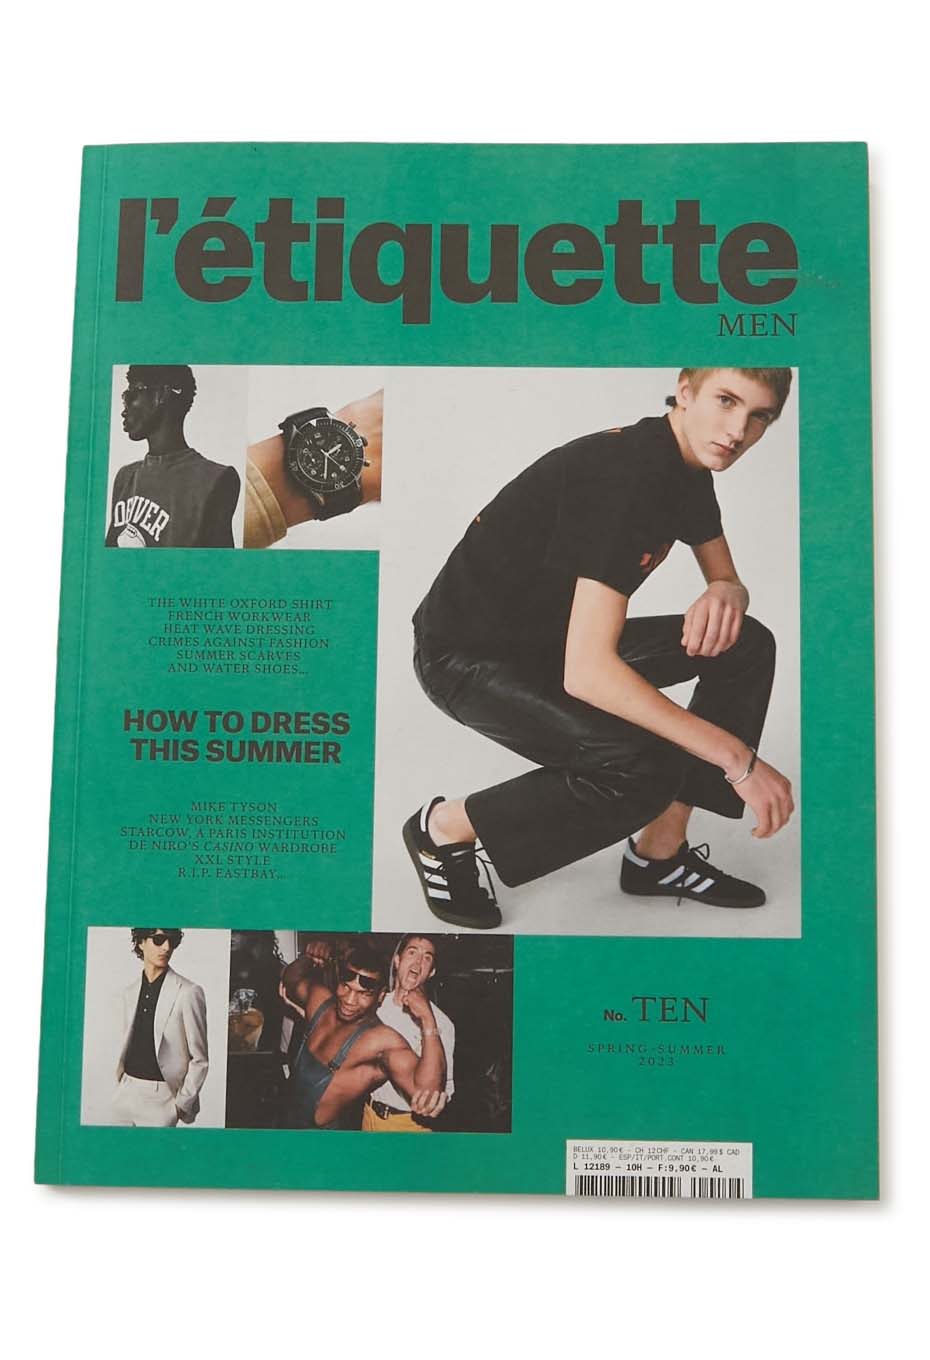 LEtiquette Magazine #10